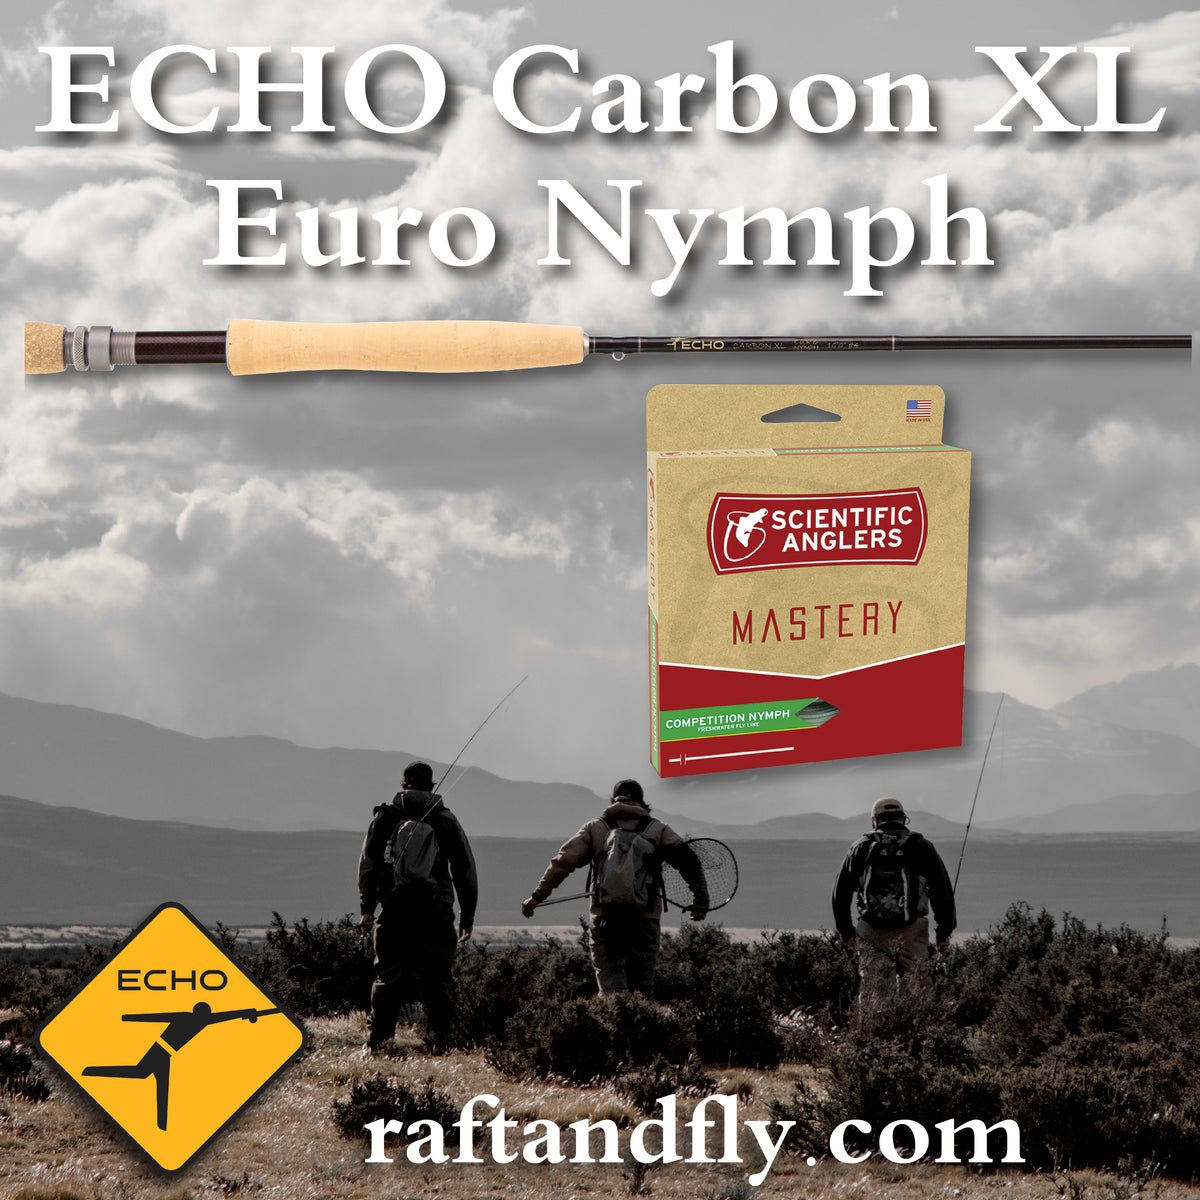 ECHO Carbon XL Euro Nymph 4wt 10'0